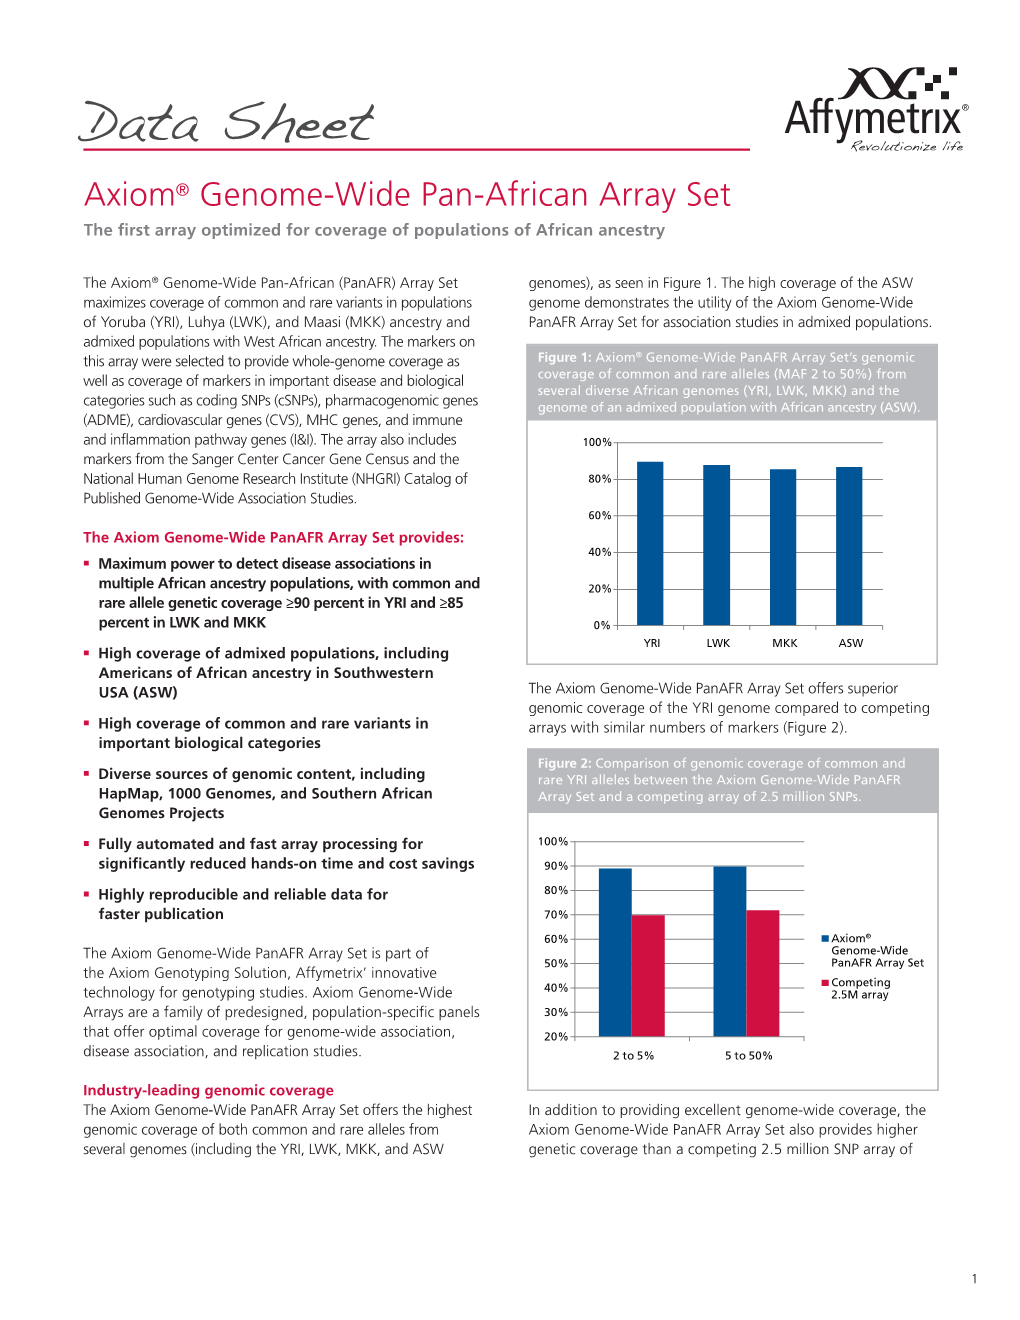 Data Sheet,Axiom Genome-Wide Pan-African Array